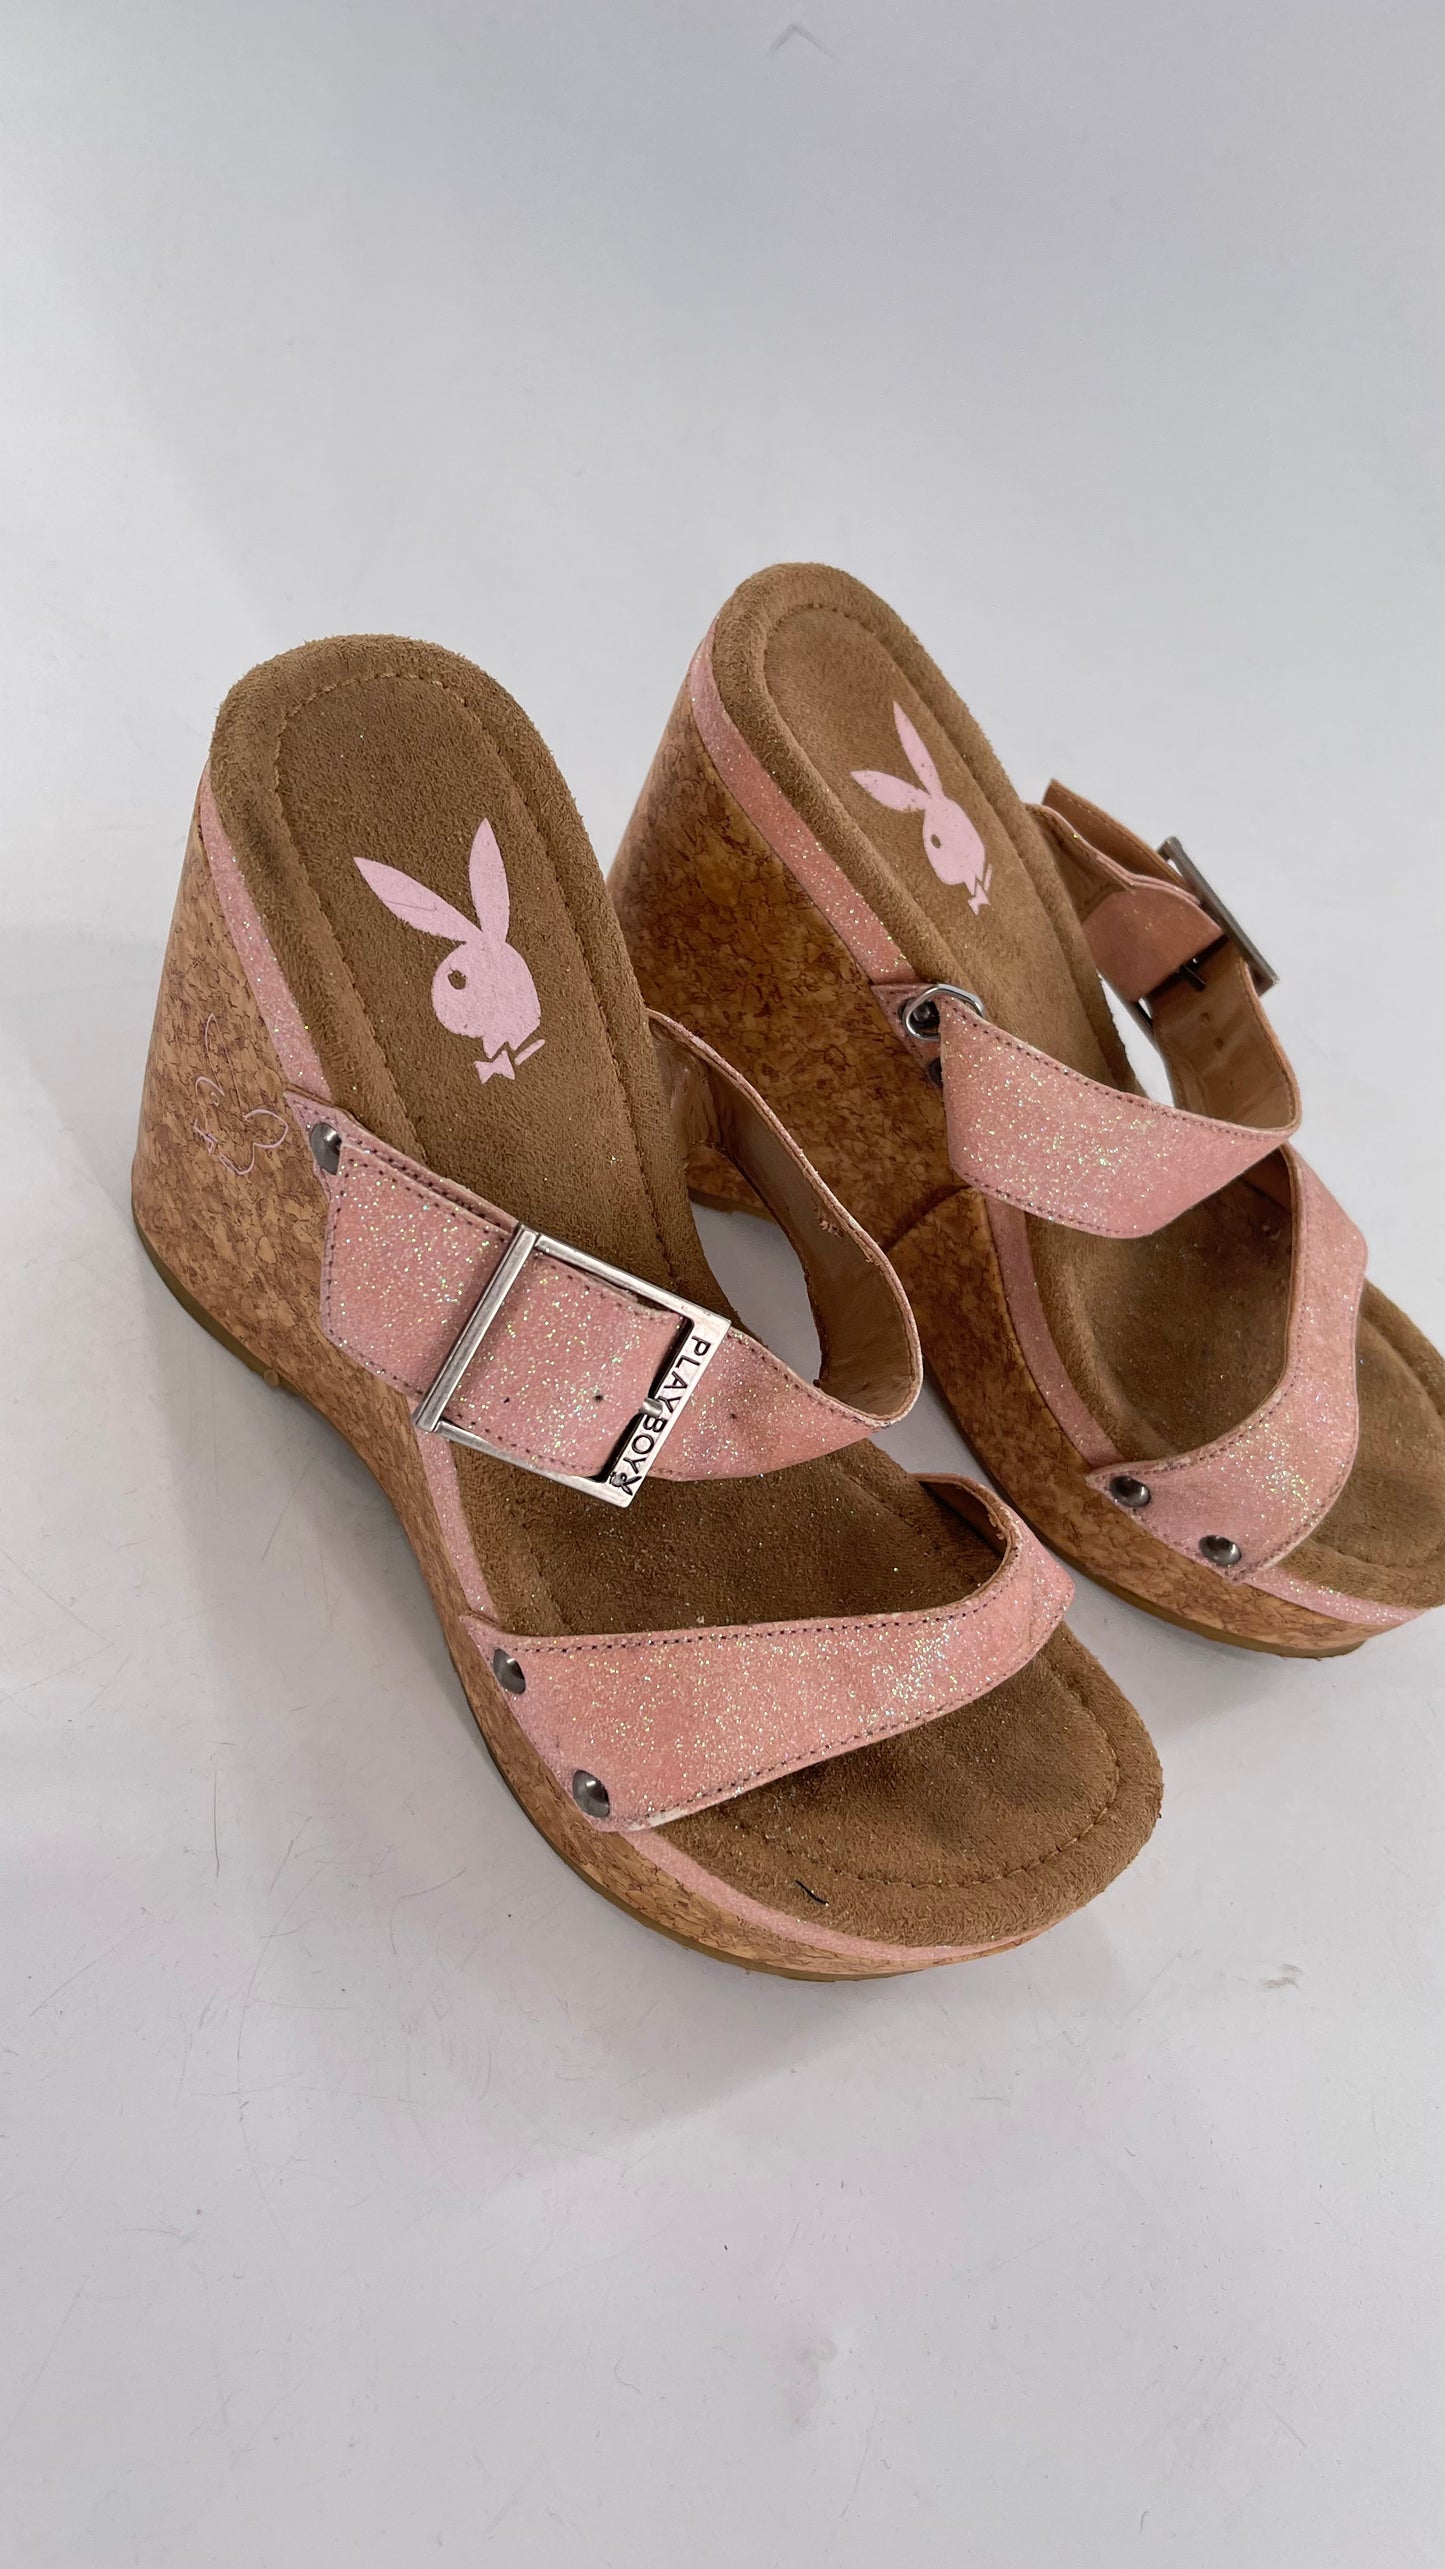 Playboy Pink Glitter Wedge Heel with Cork Heel and Playboy Engraved Buckle (6)